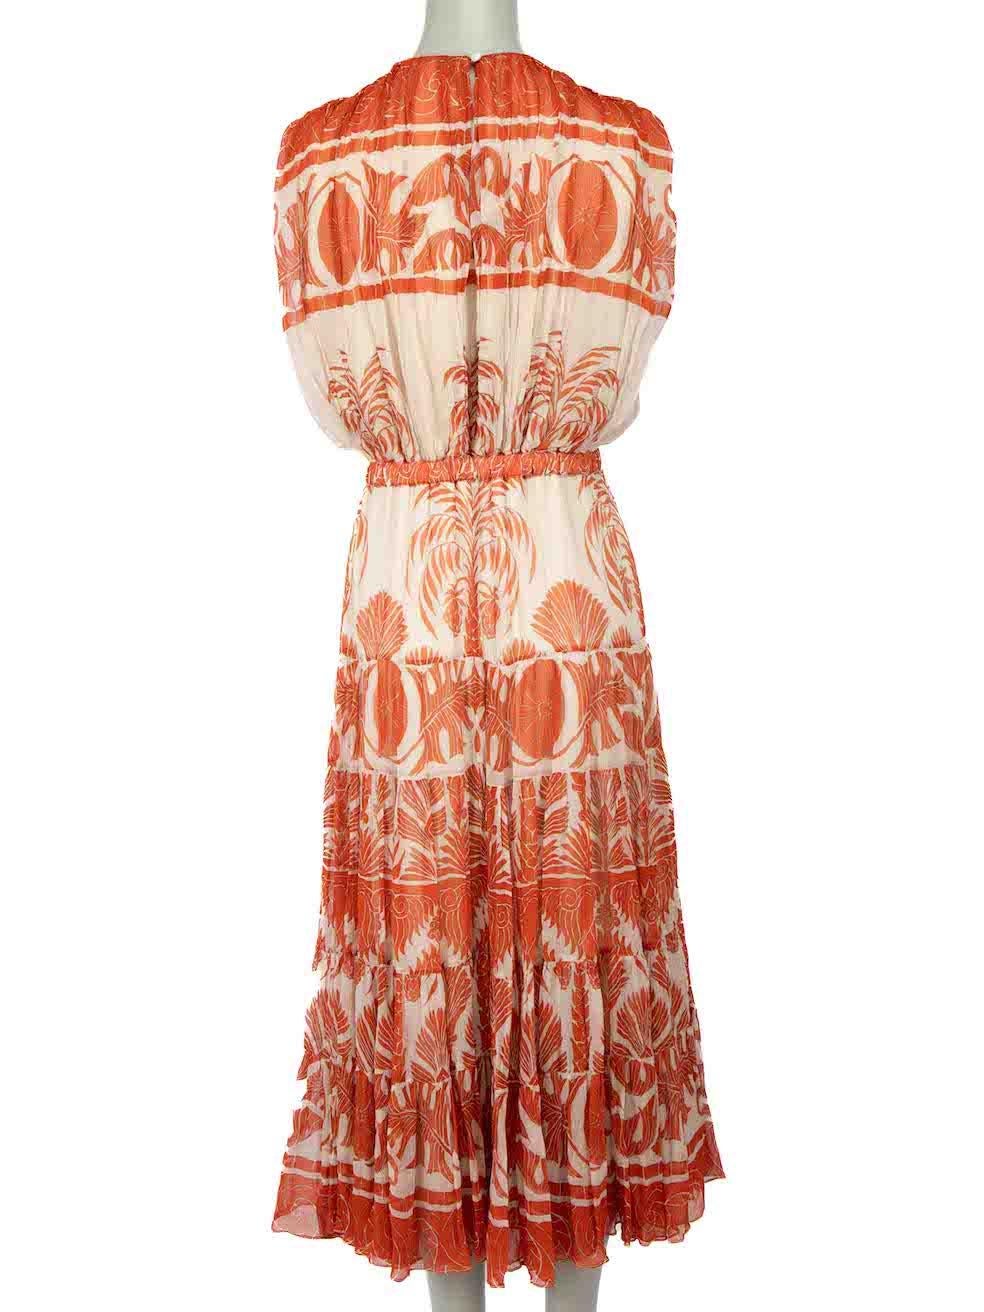 Johanna Ortiz Orange Cordillera Pattern Dress Size S In Excellent Condition For Sale In London, GB